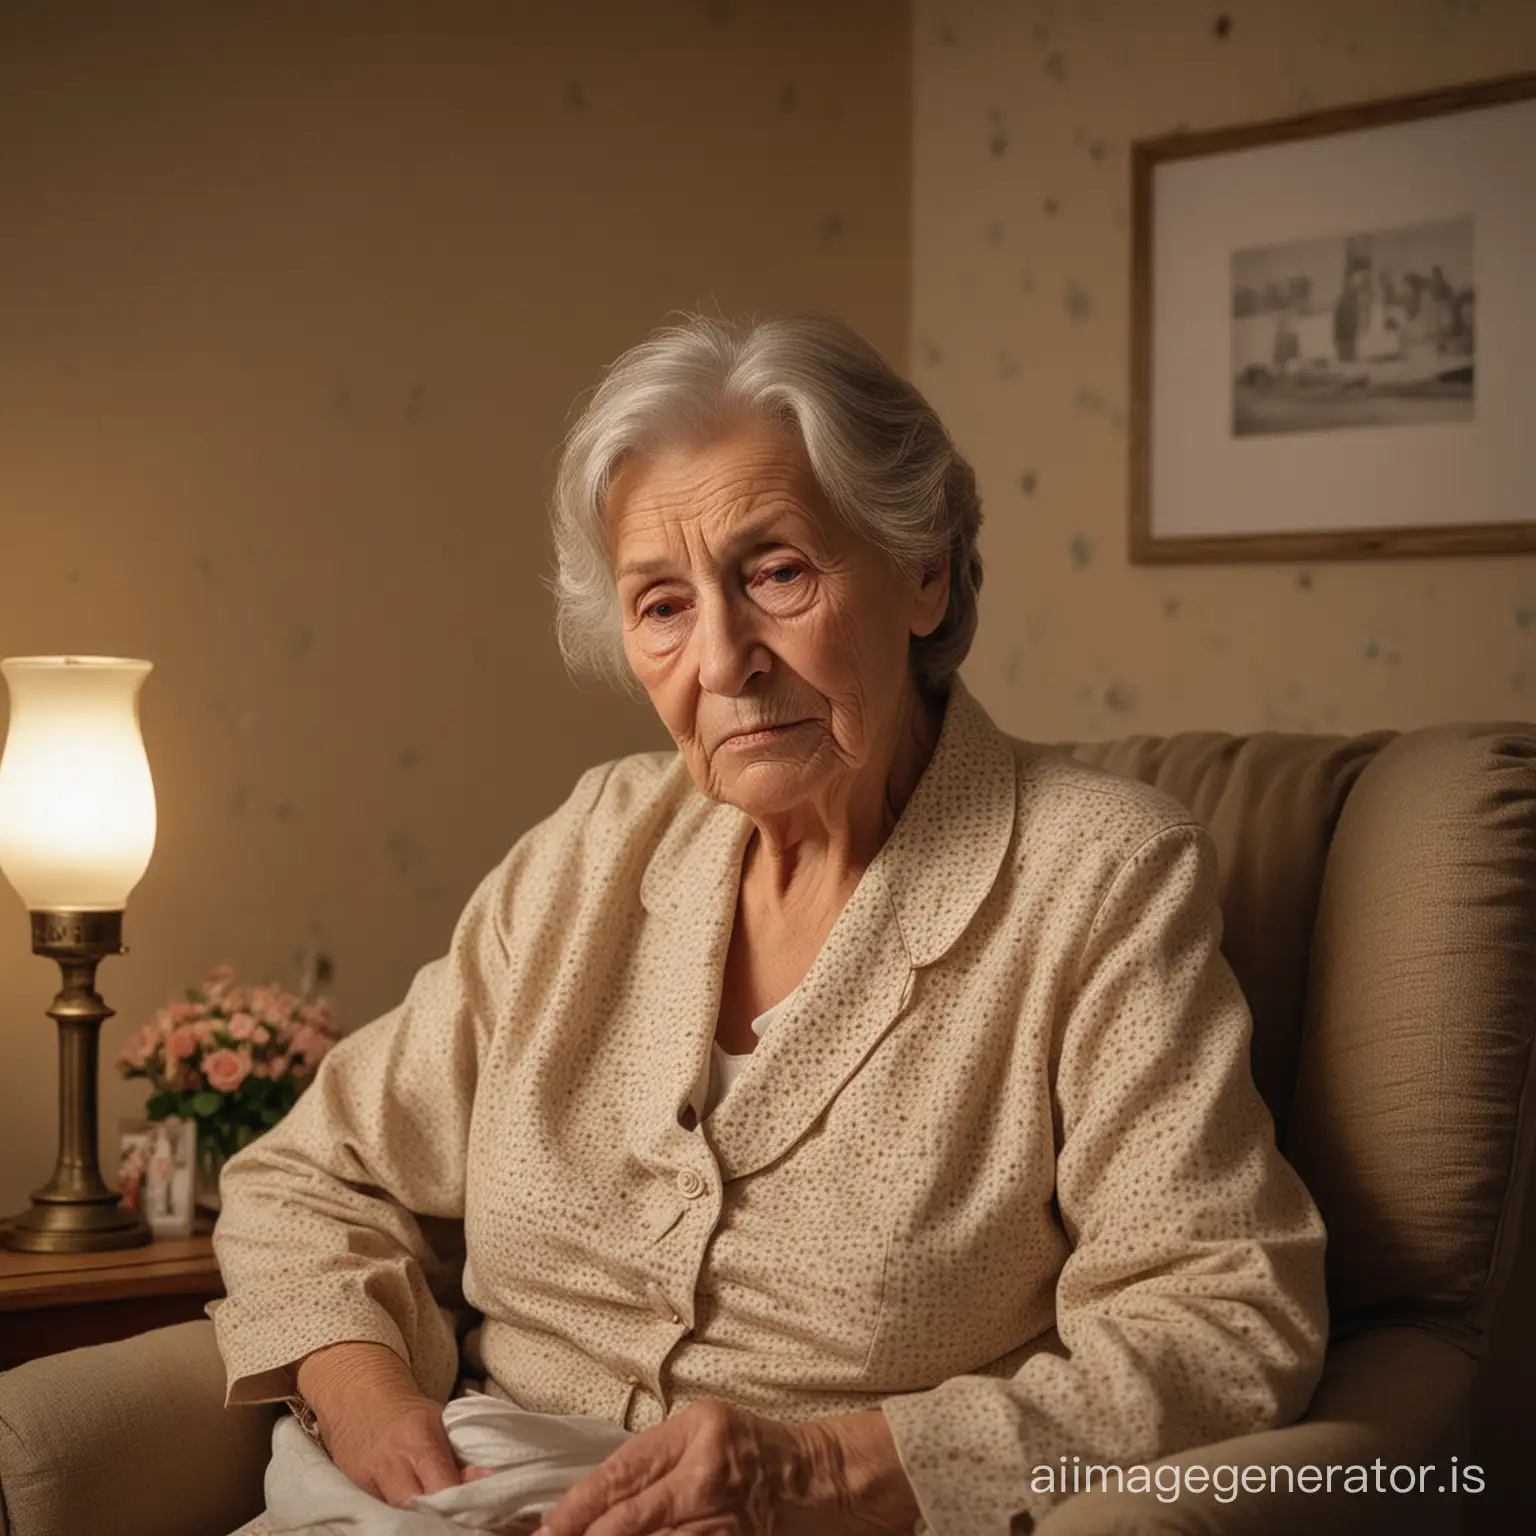 Elderly-Woman-Reflecting-on-Memories-in-Dimly-Lit-Bedroom